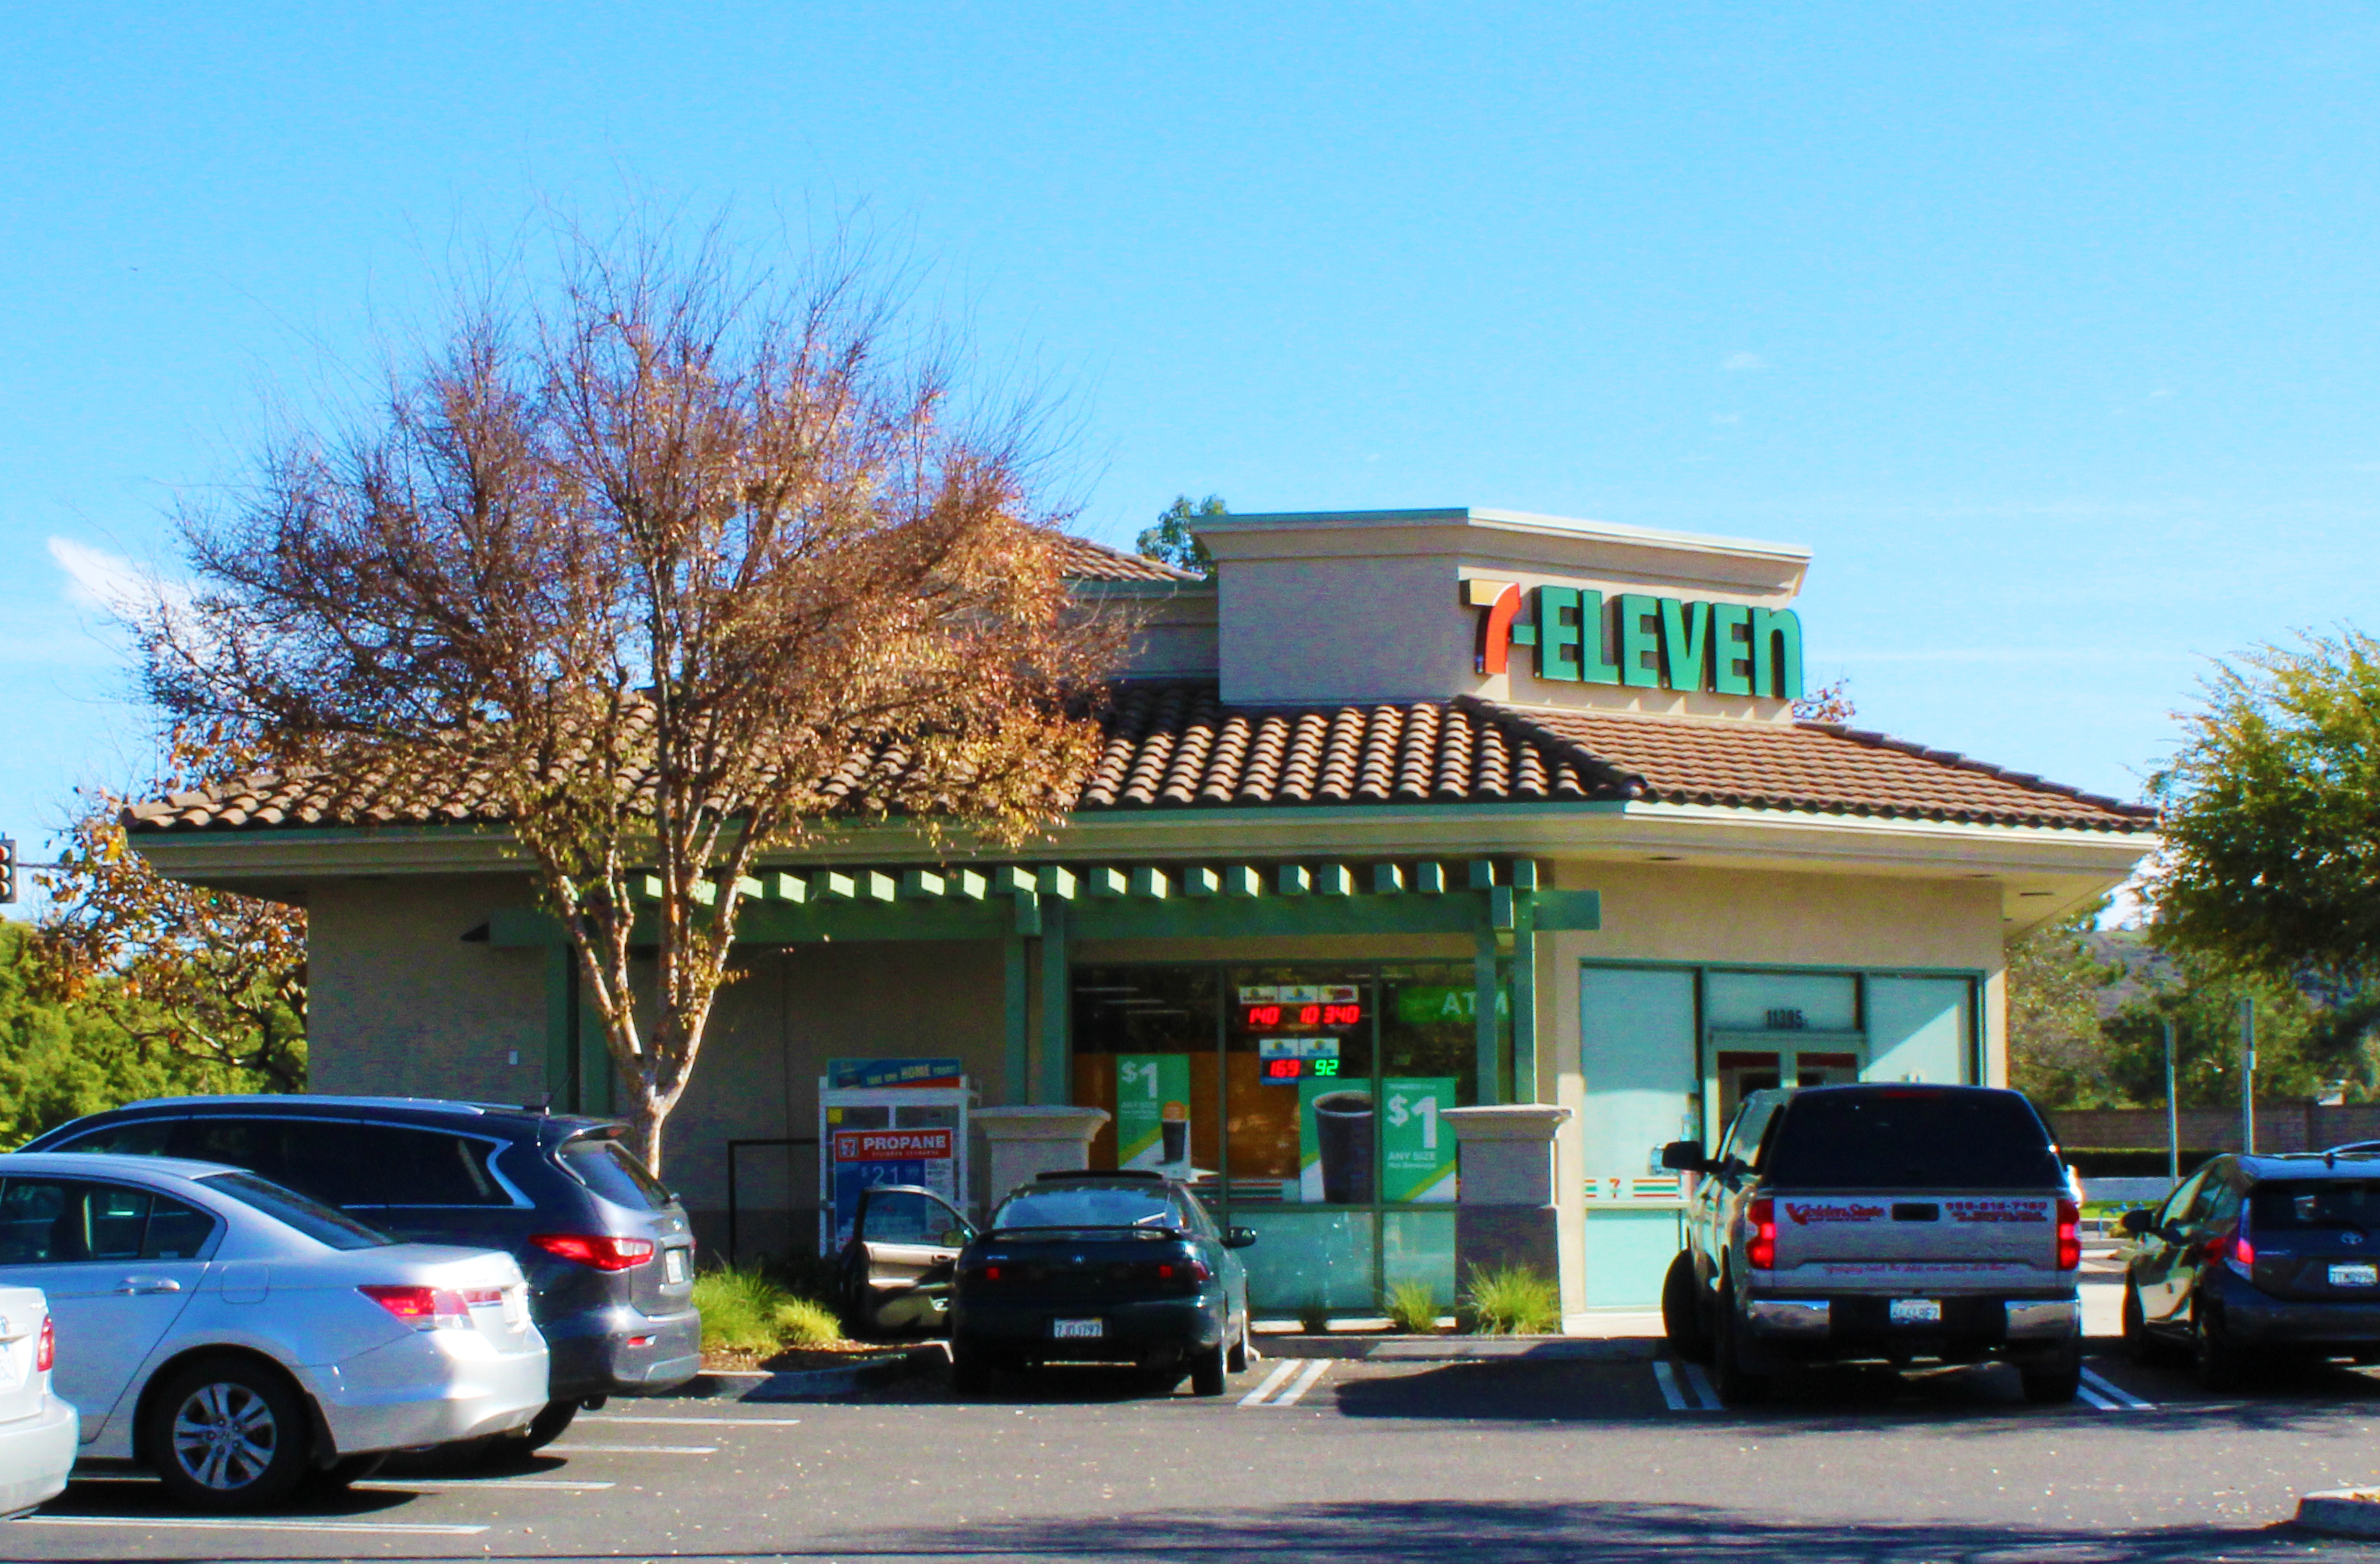 7 Eleven at Sabre Springs Plaza, San Diego, CA